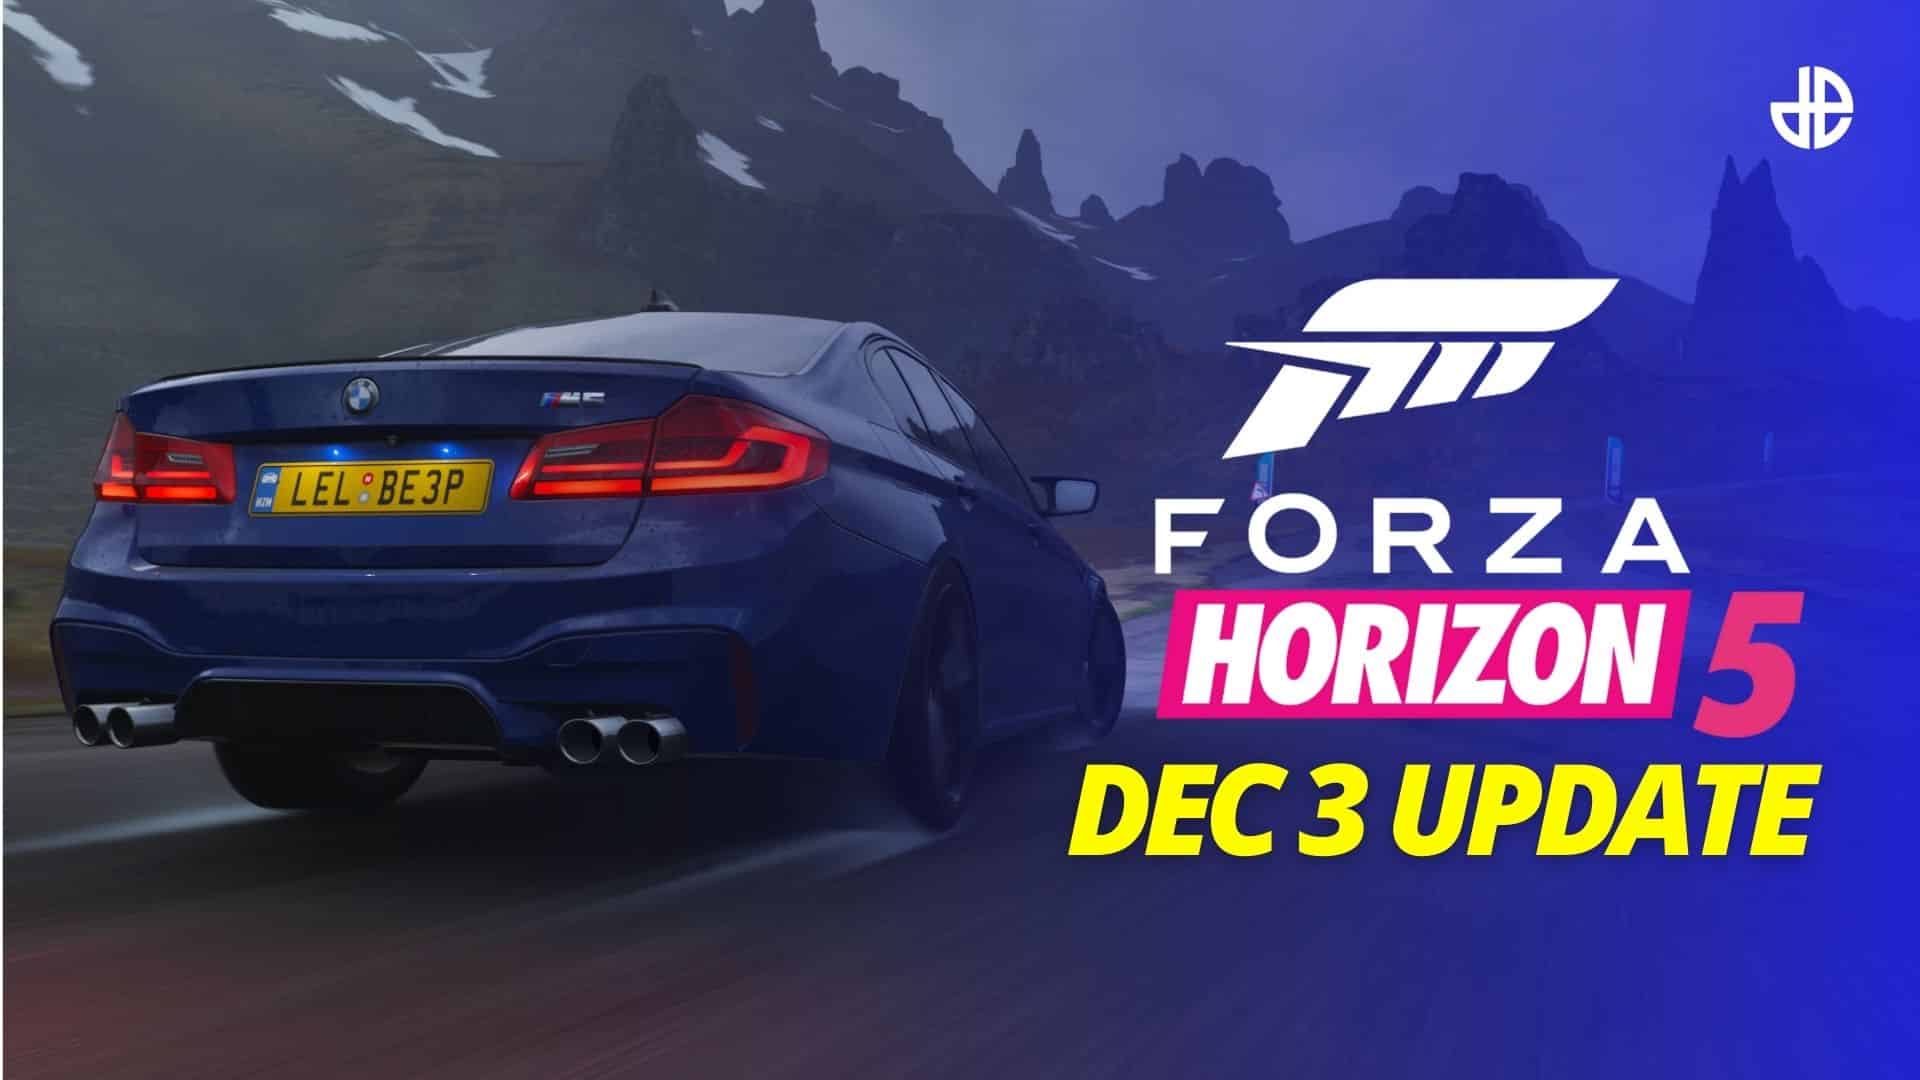 Forza horizon 5 update december 3